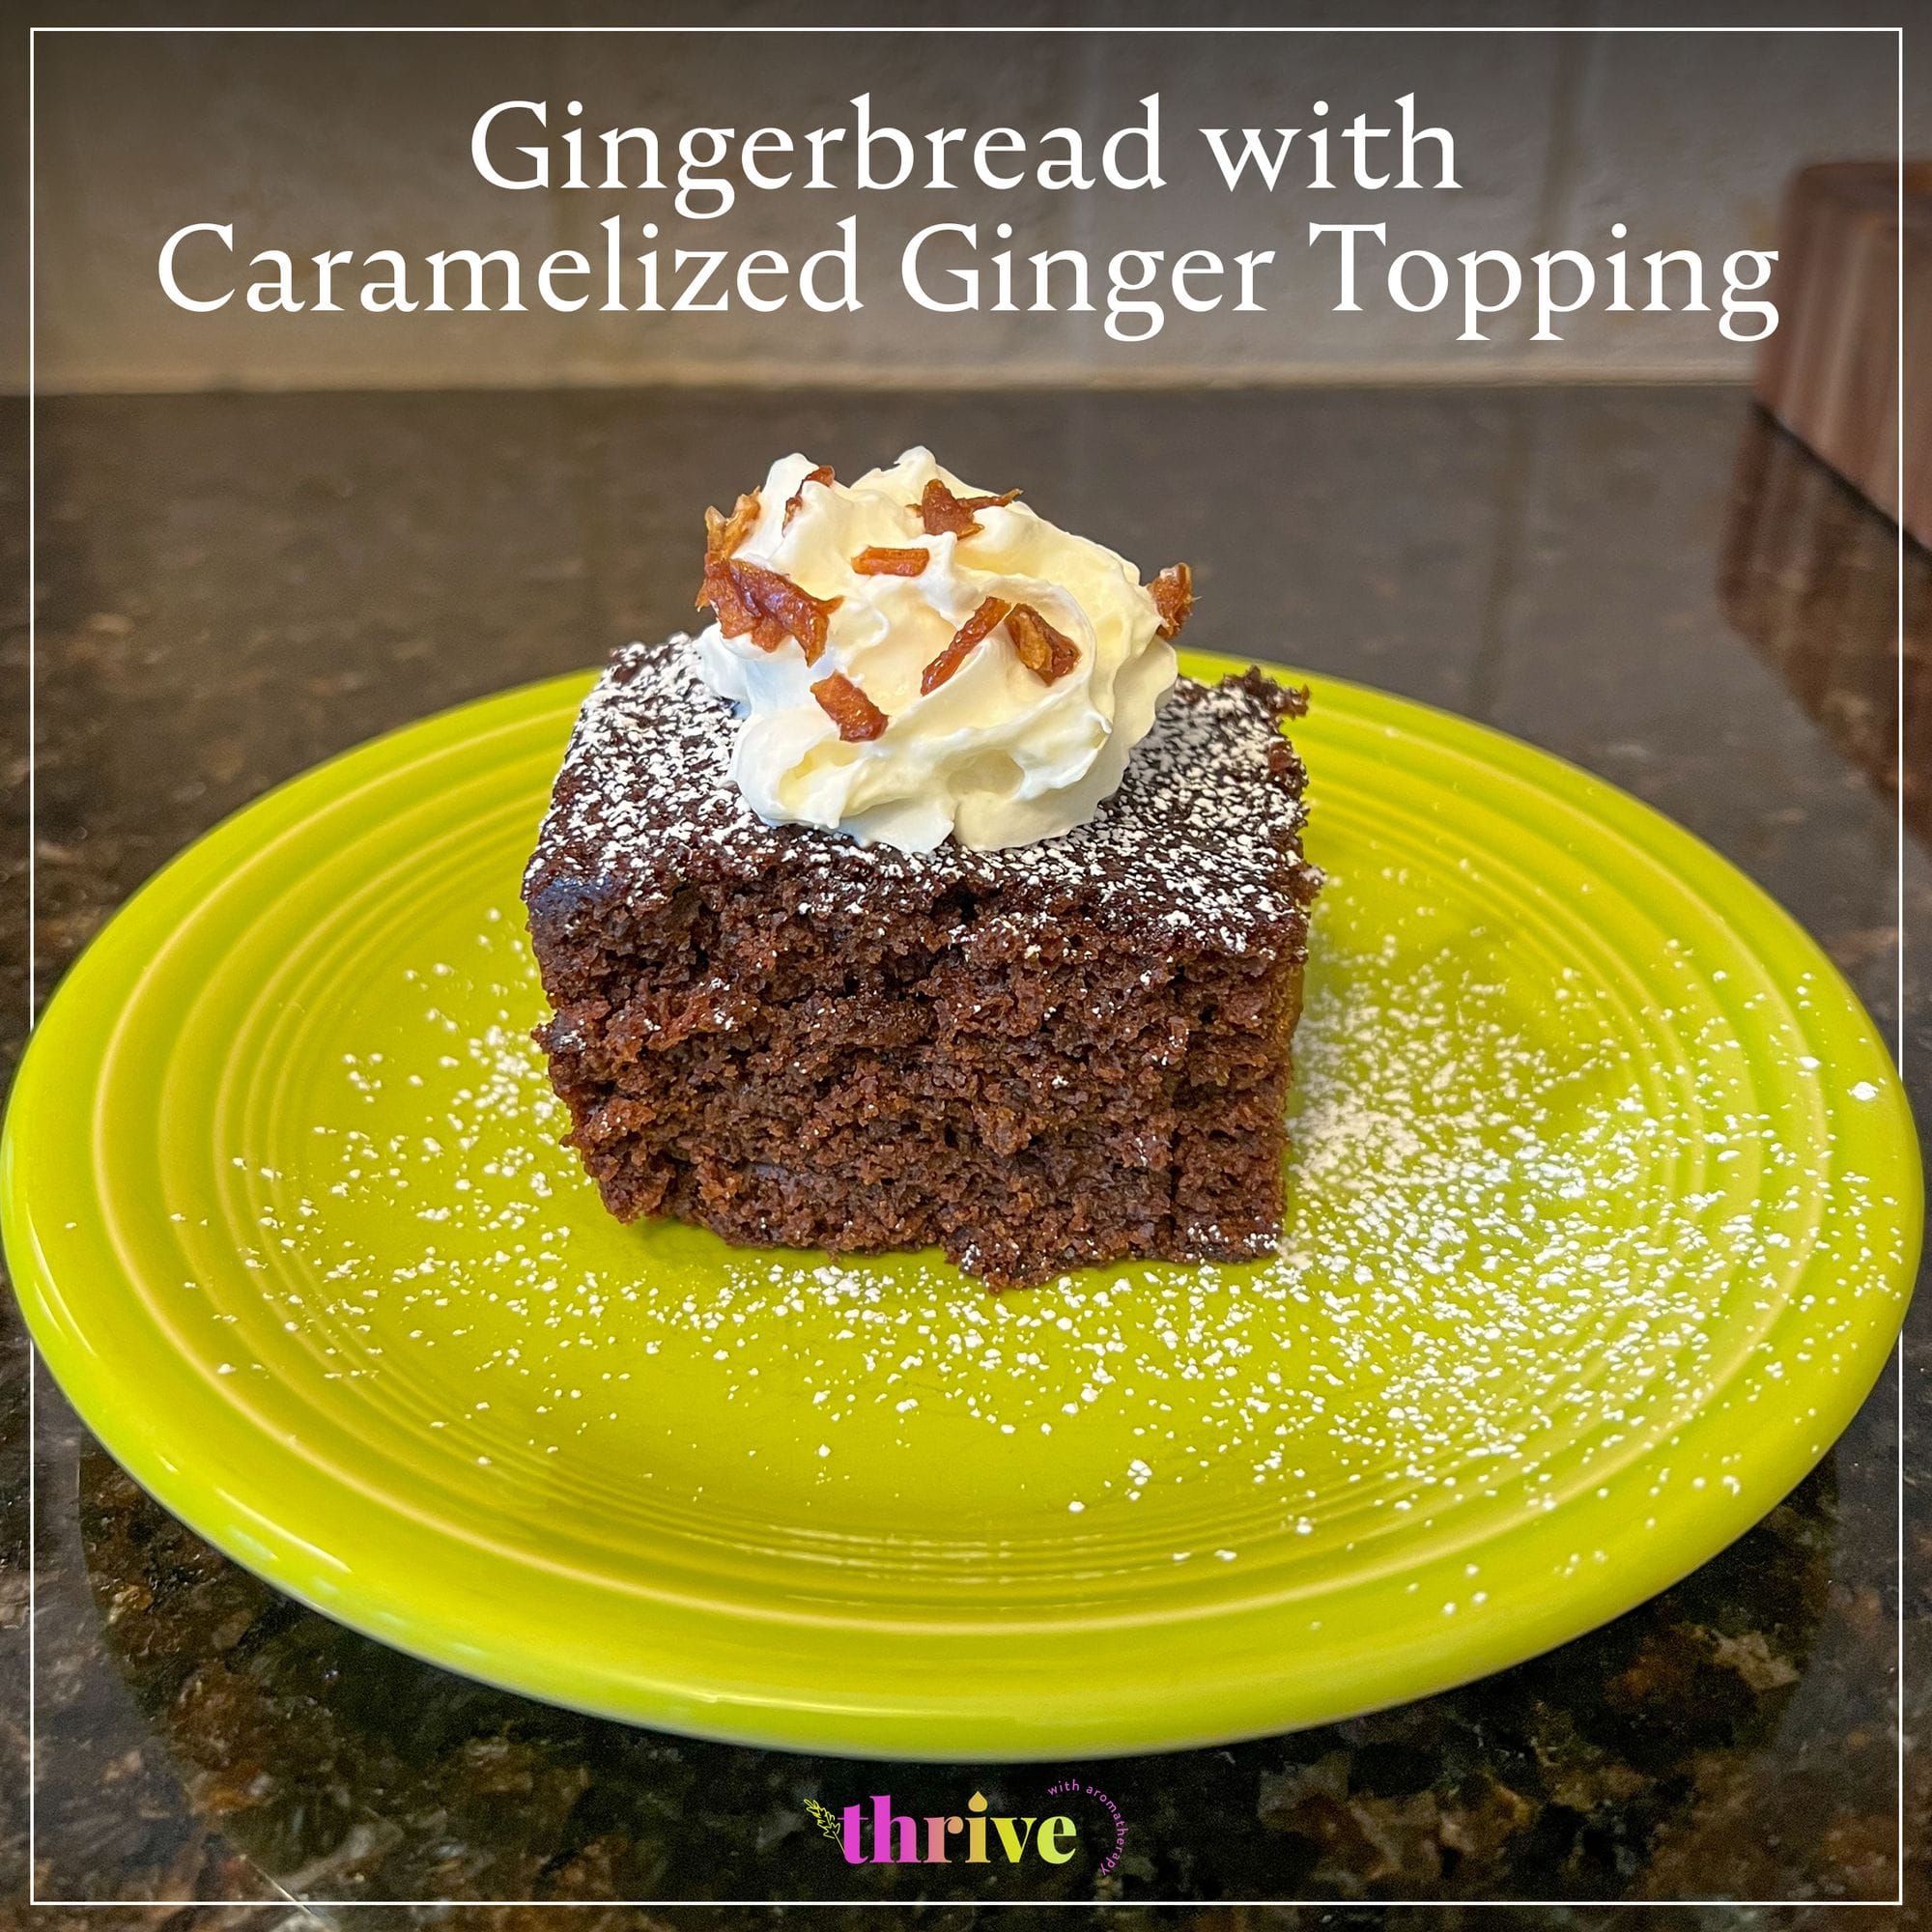 Thrive gingerbread recipe